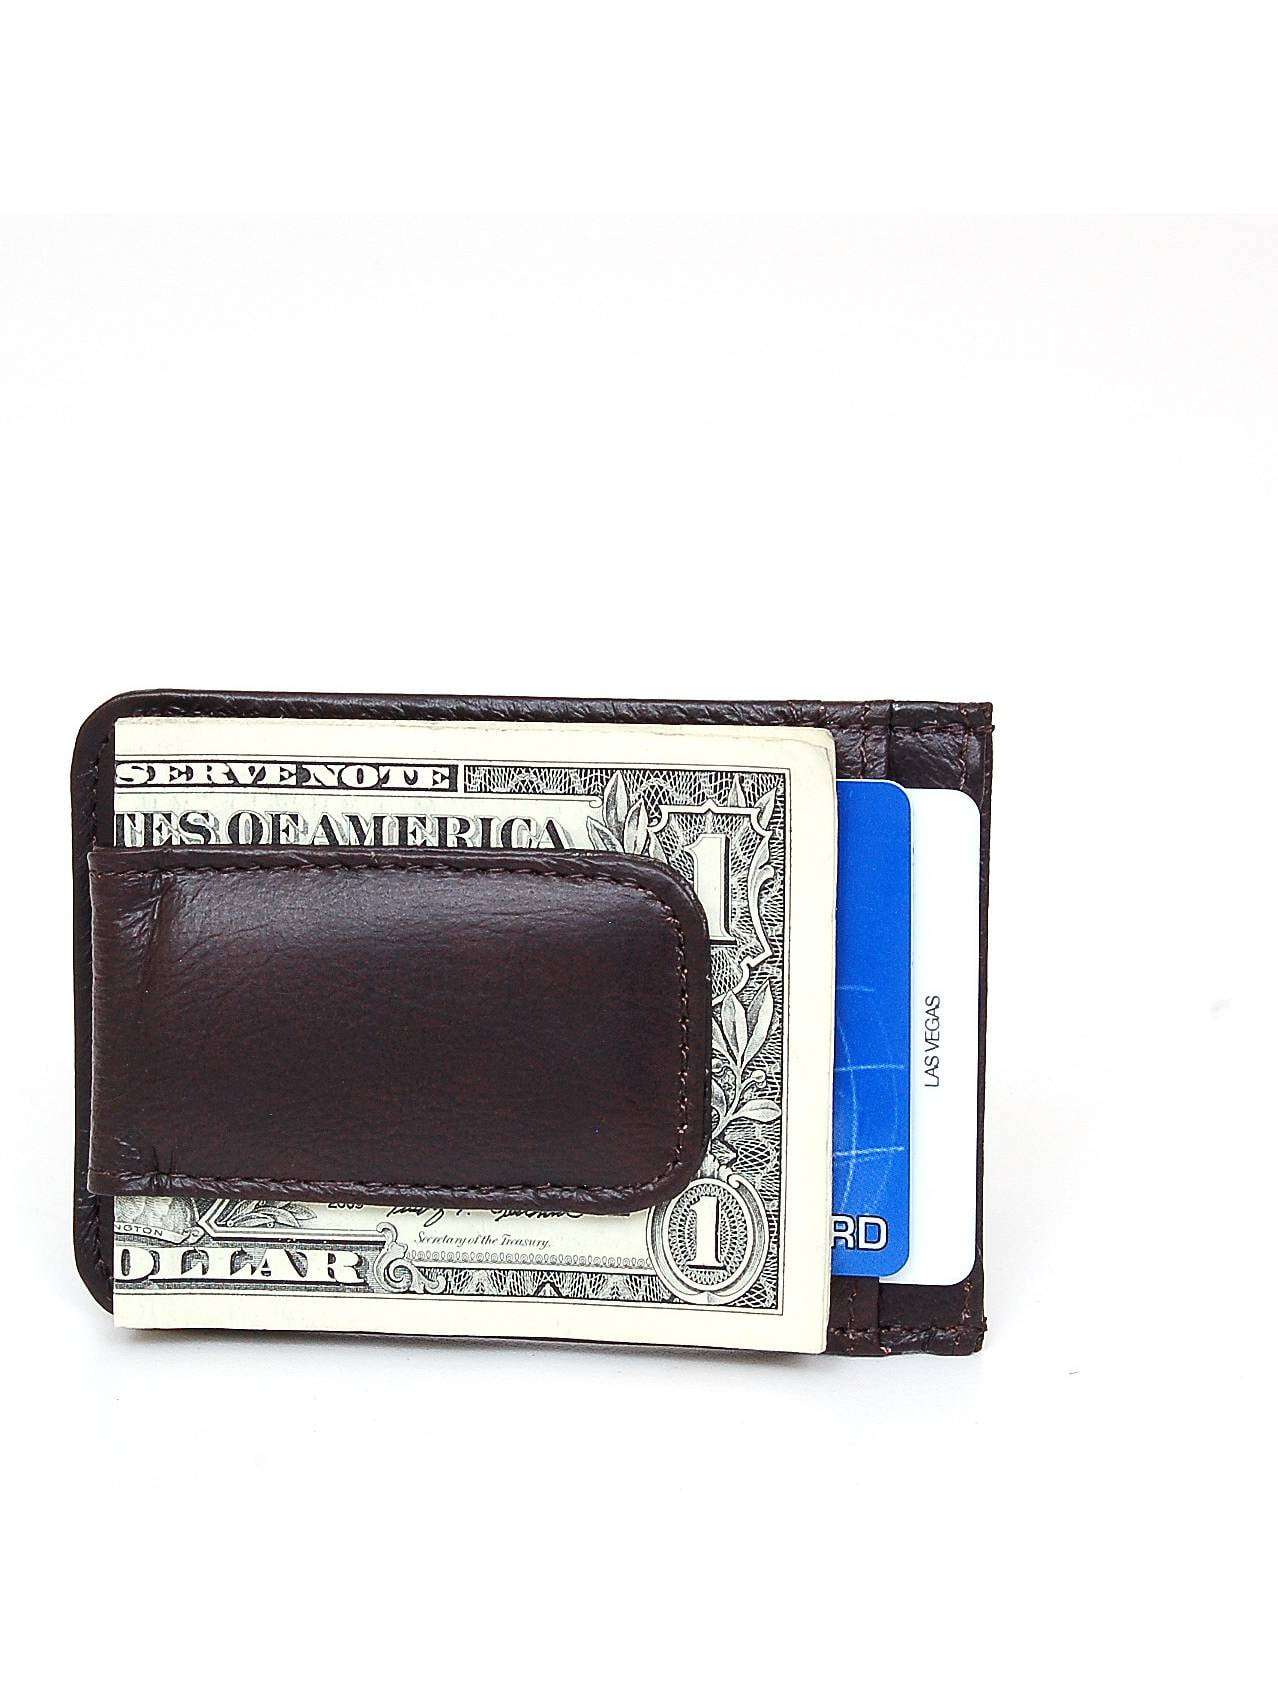 Mini Stainless Steel Slim Money Clip Purse Wallet Credit Card ID Cash Holder HB$ 